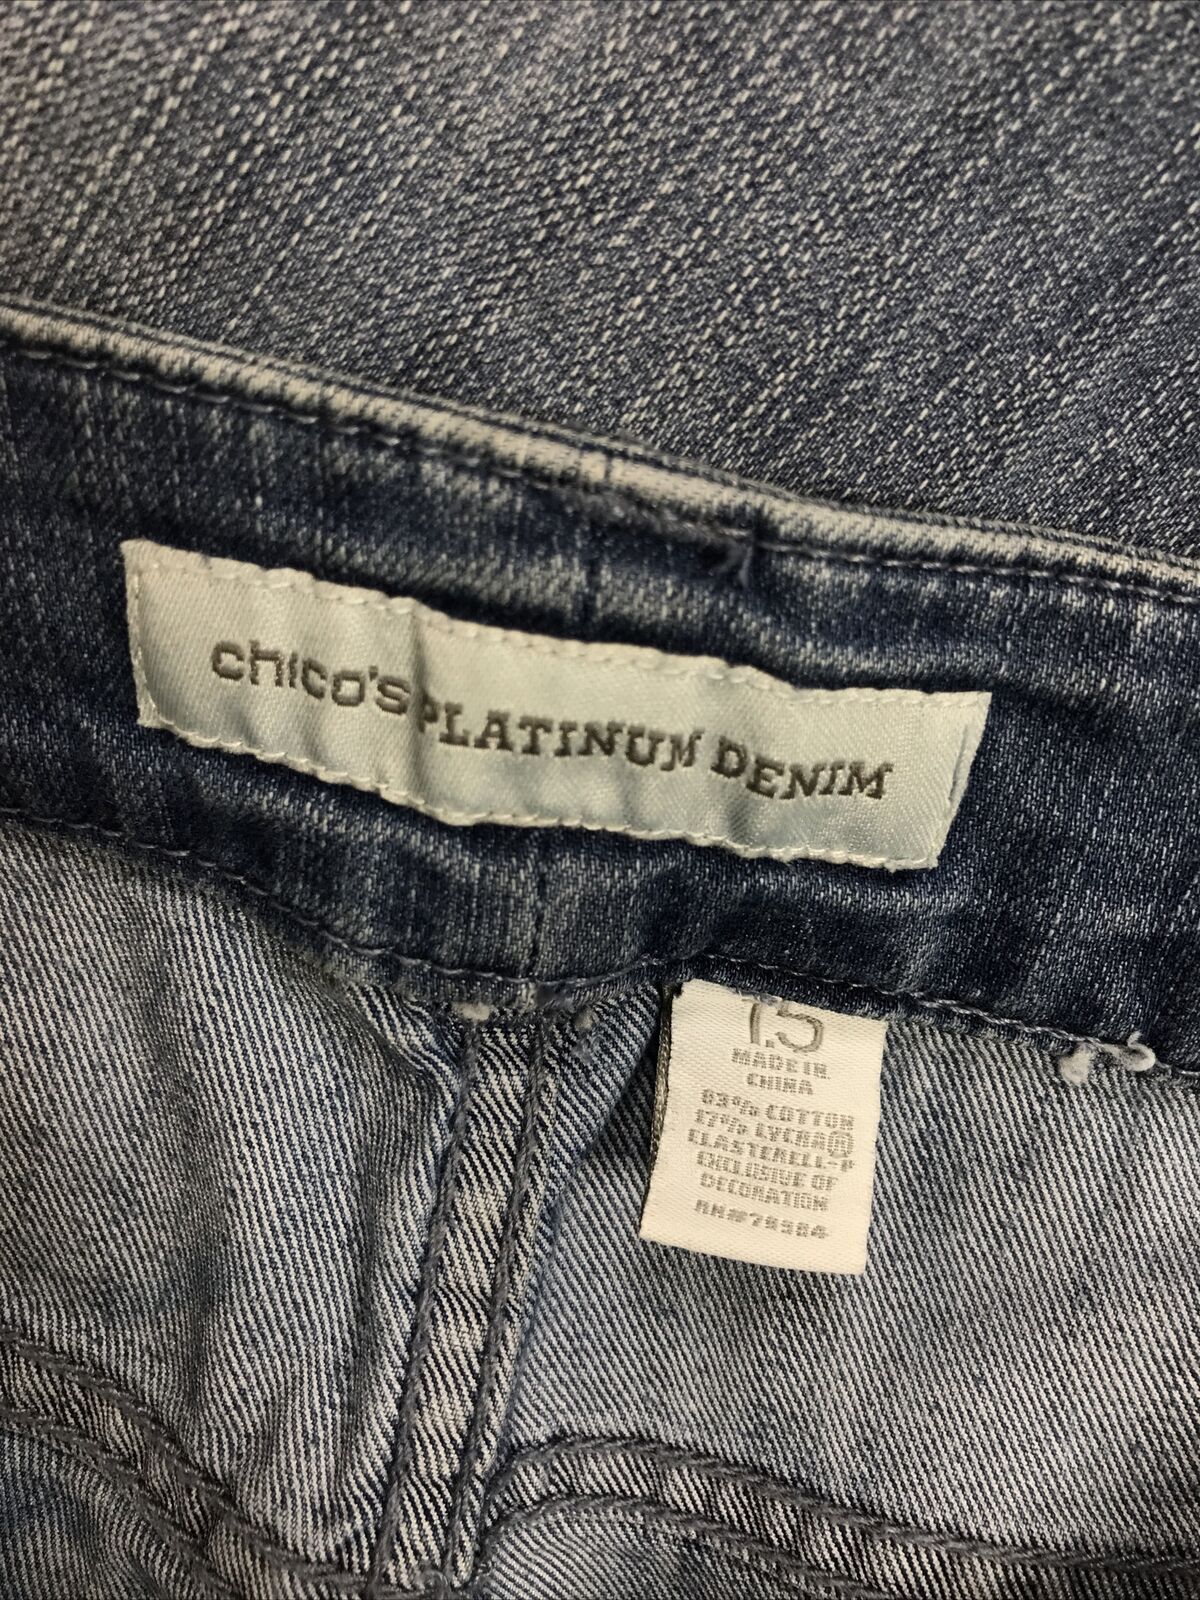 Chico's Platinum Denim Women's Light Wash Slim Leg Jeans - 1.5 (10)